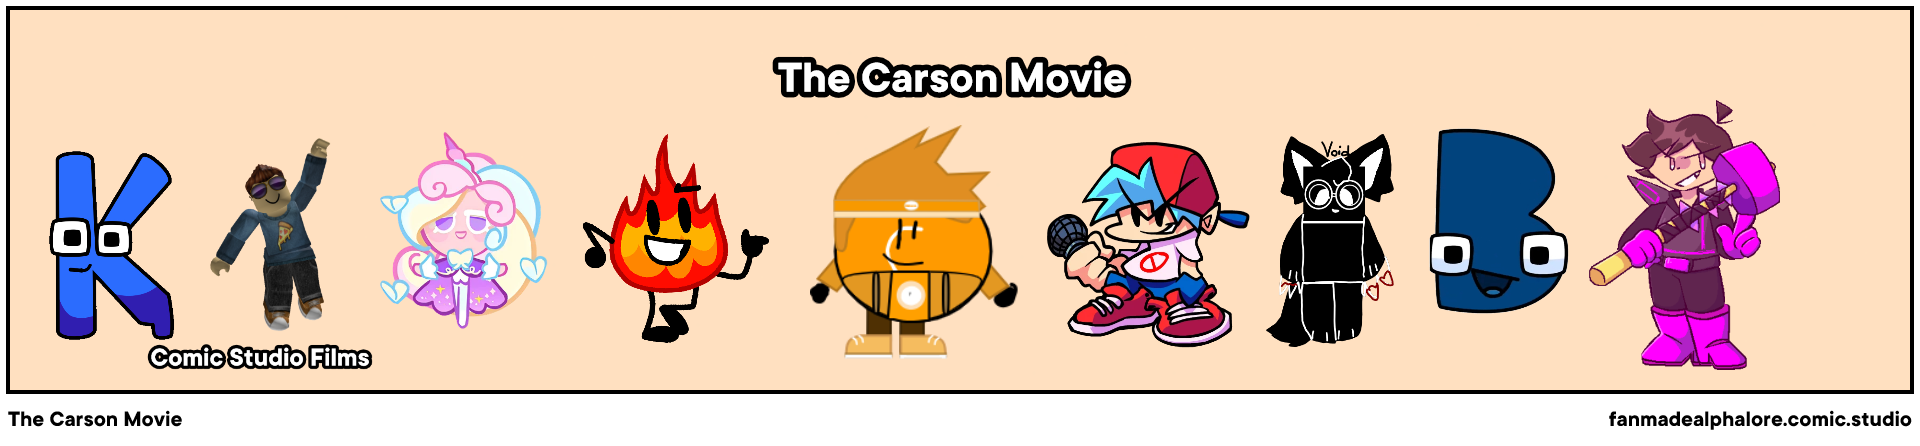 The Carson Movie